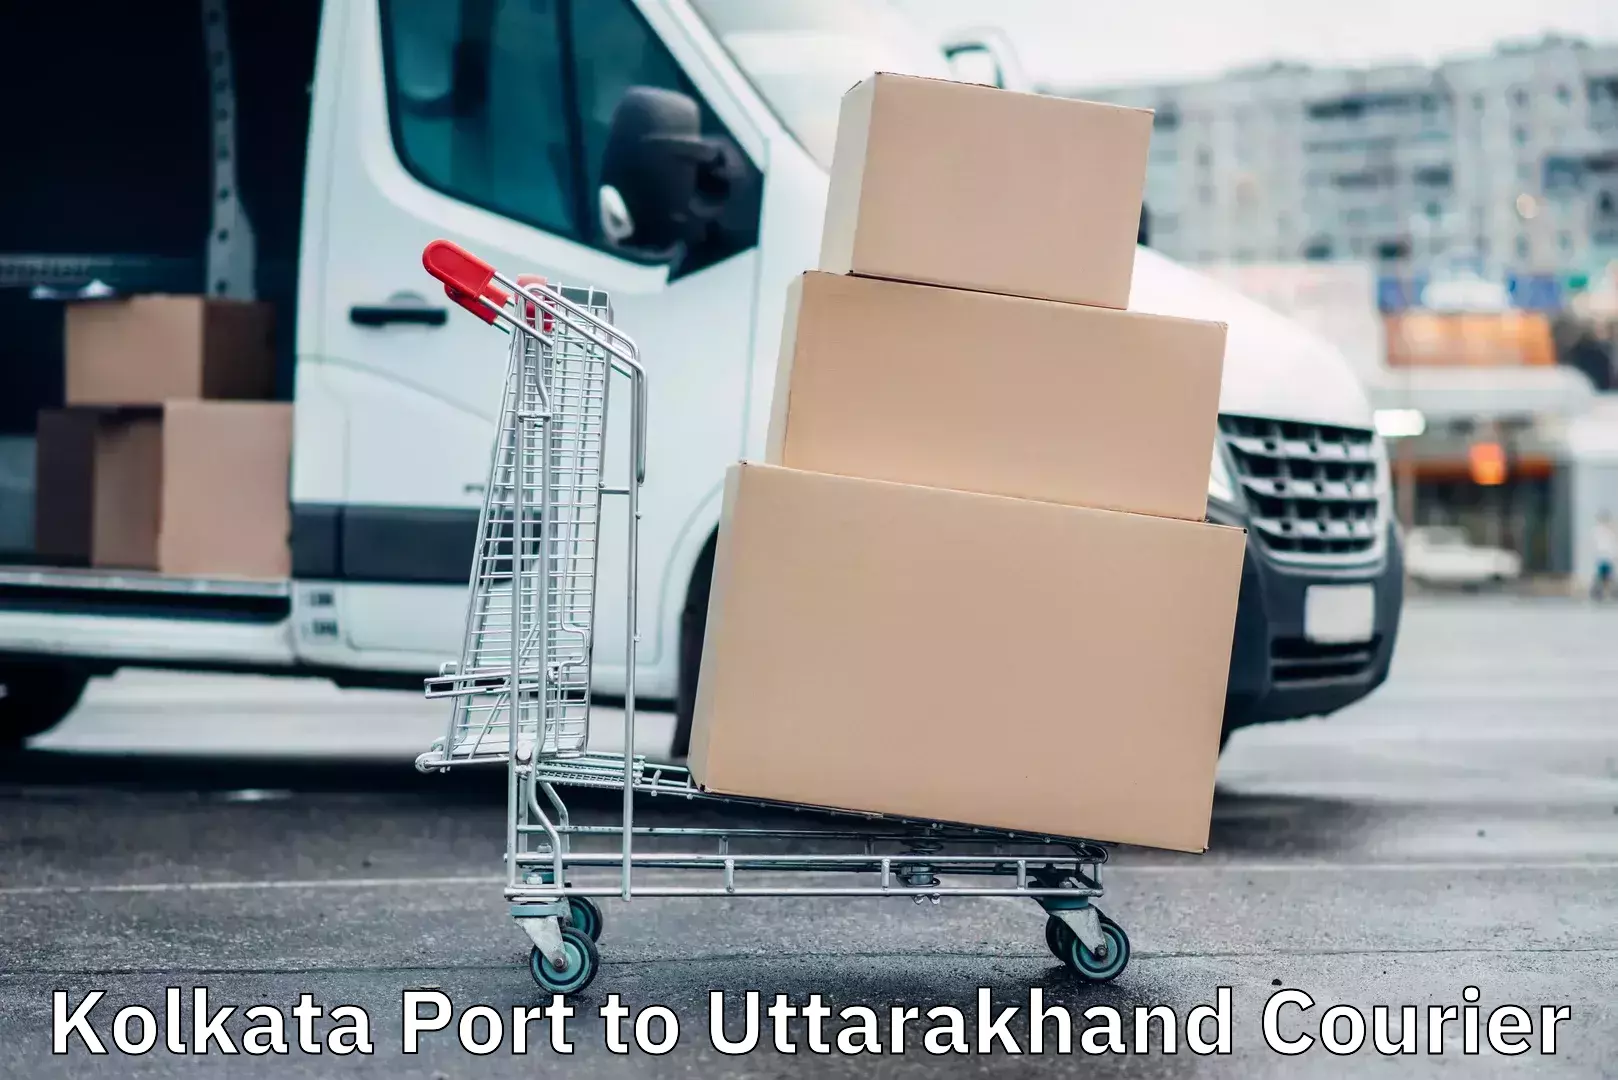 High-speed parcel service Kolkata Port to Uttarakhand